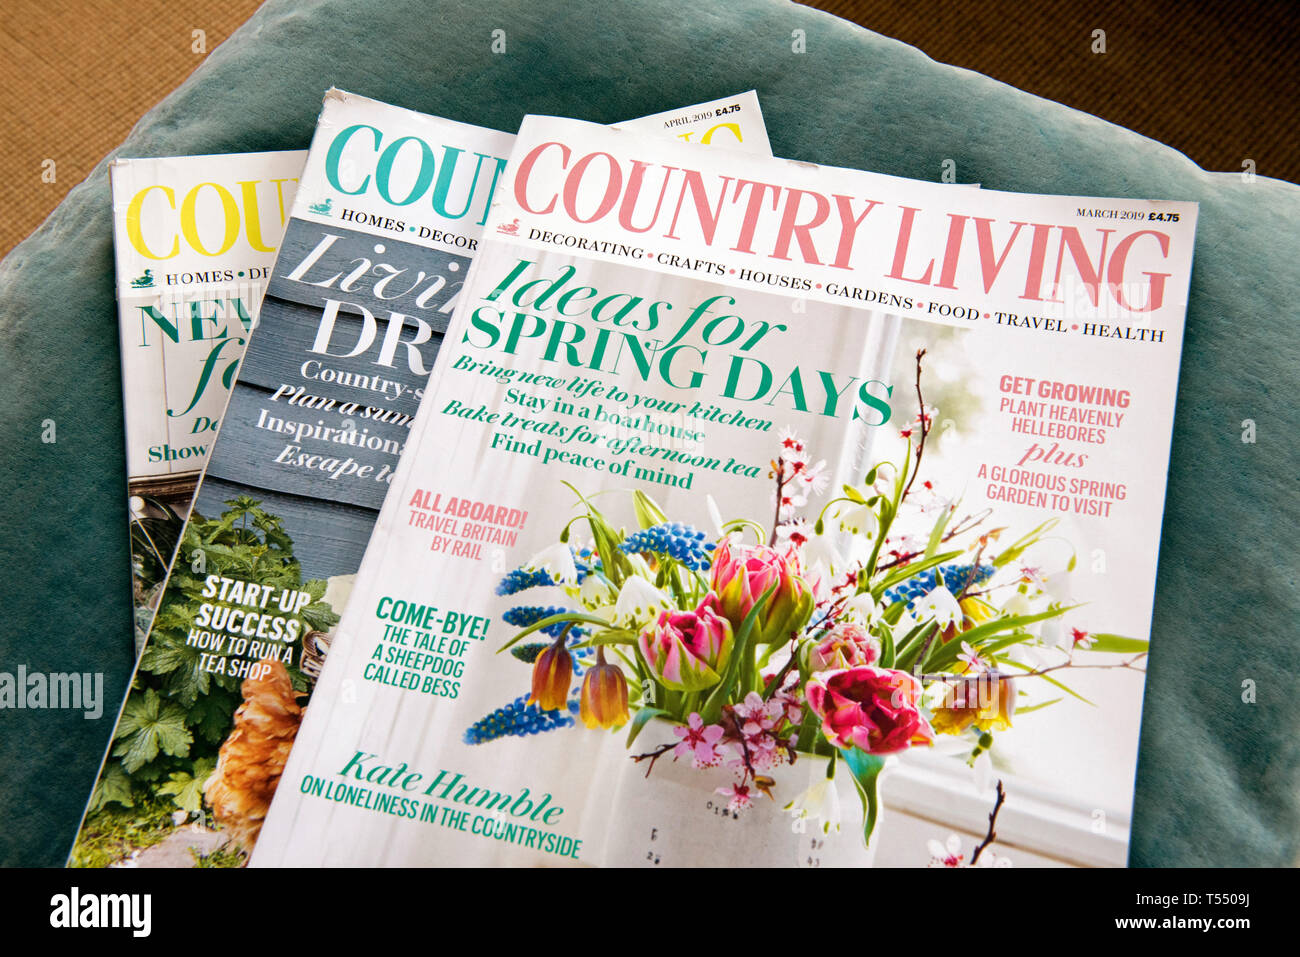 Three Country Living magazines on velvet cushion Stock Photo